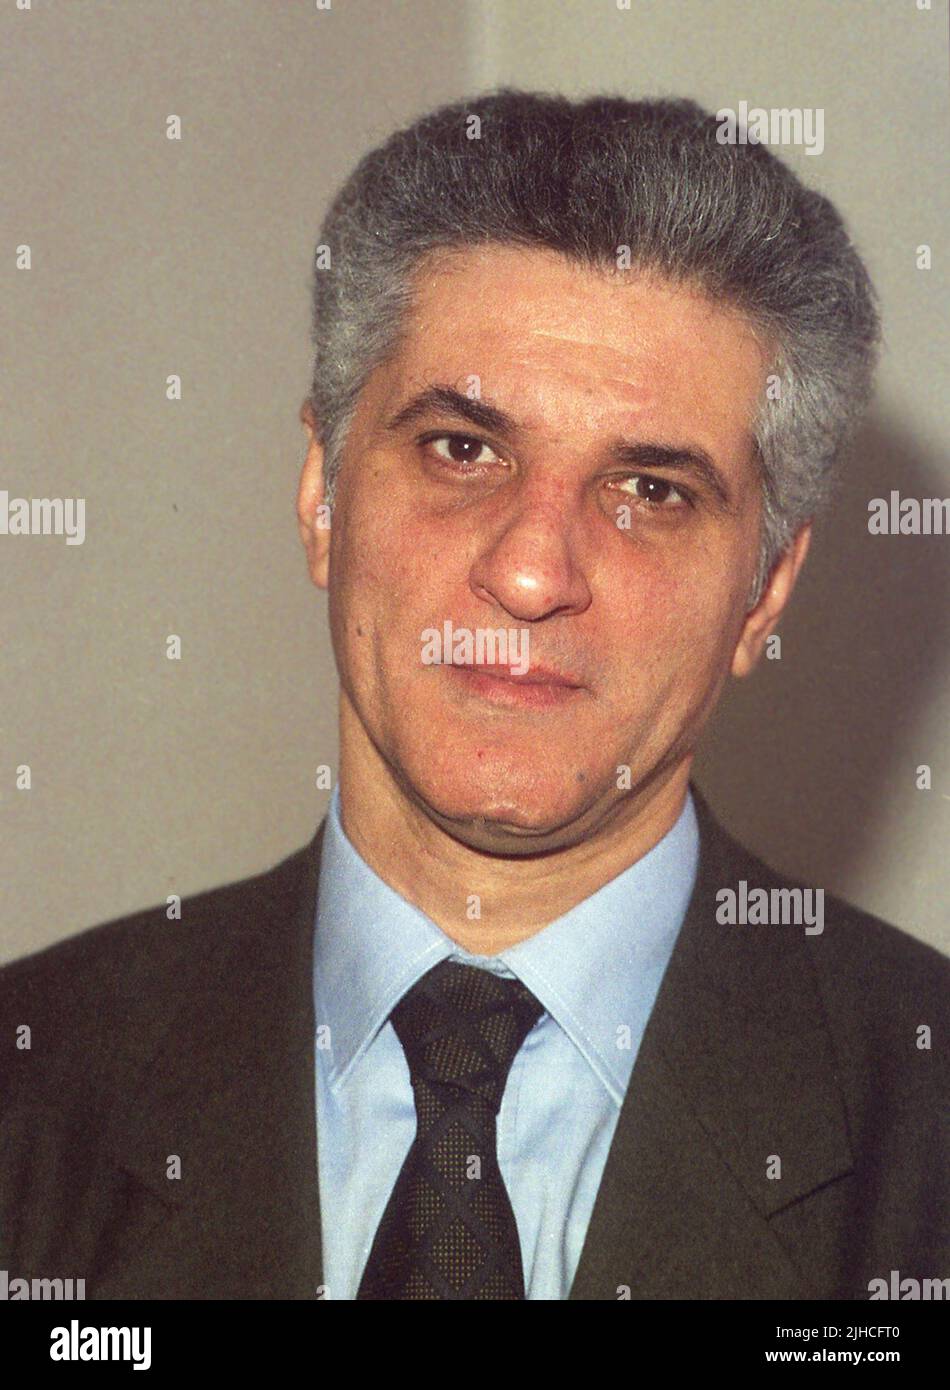 Uomo d'affari e sindaco rumeno George Pădure, circa 1995 Foto Stock